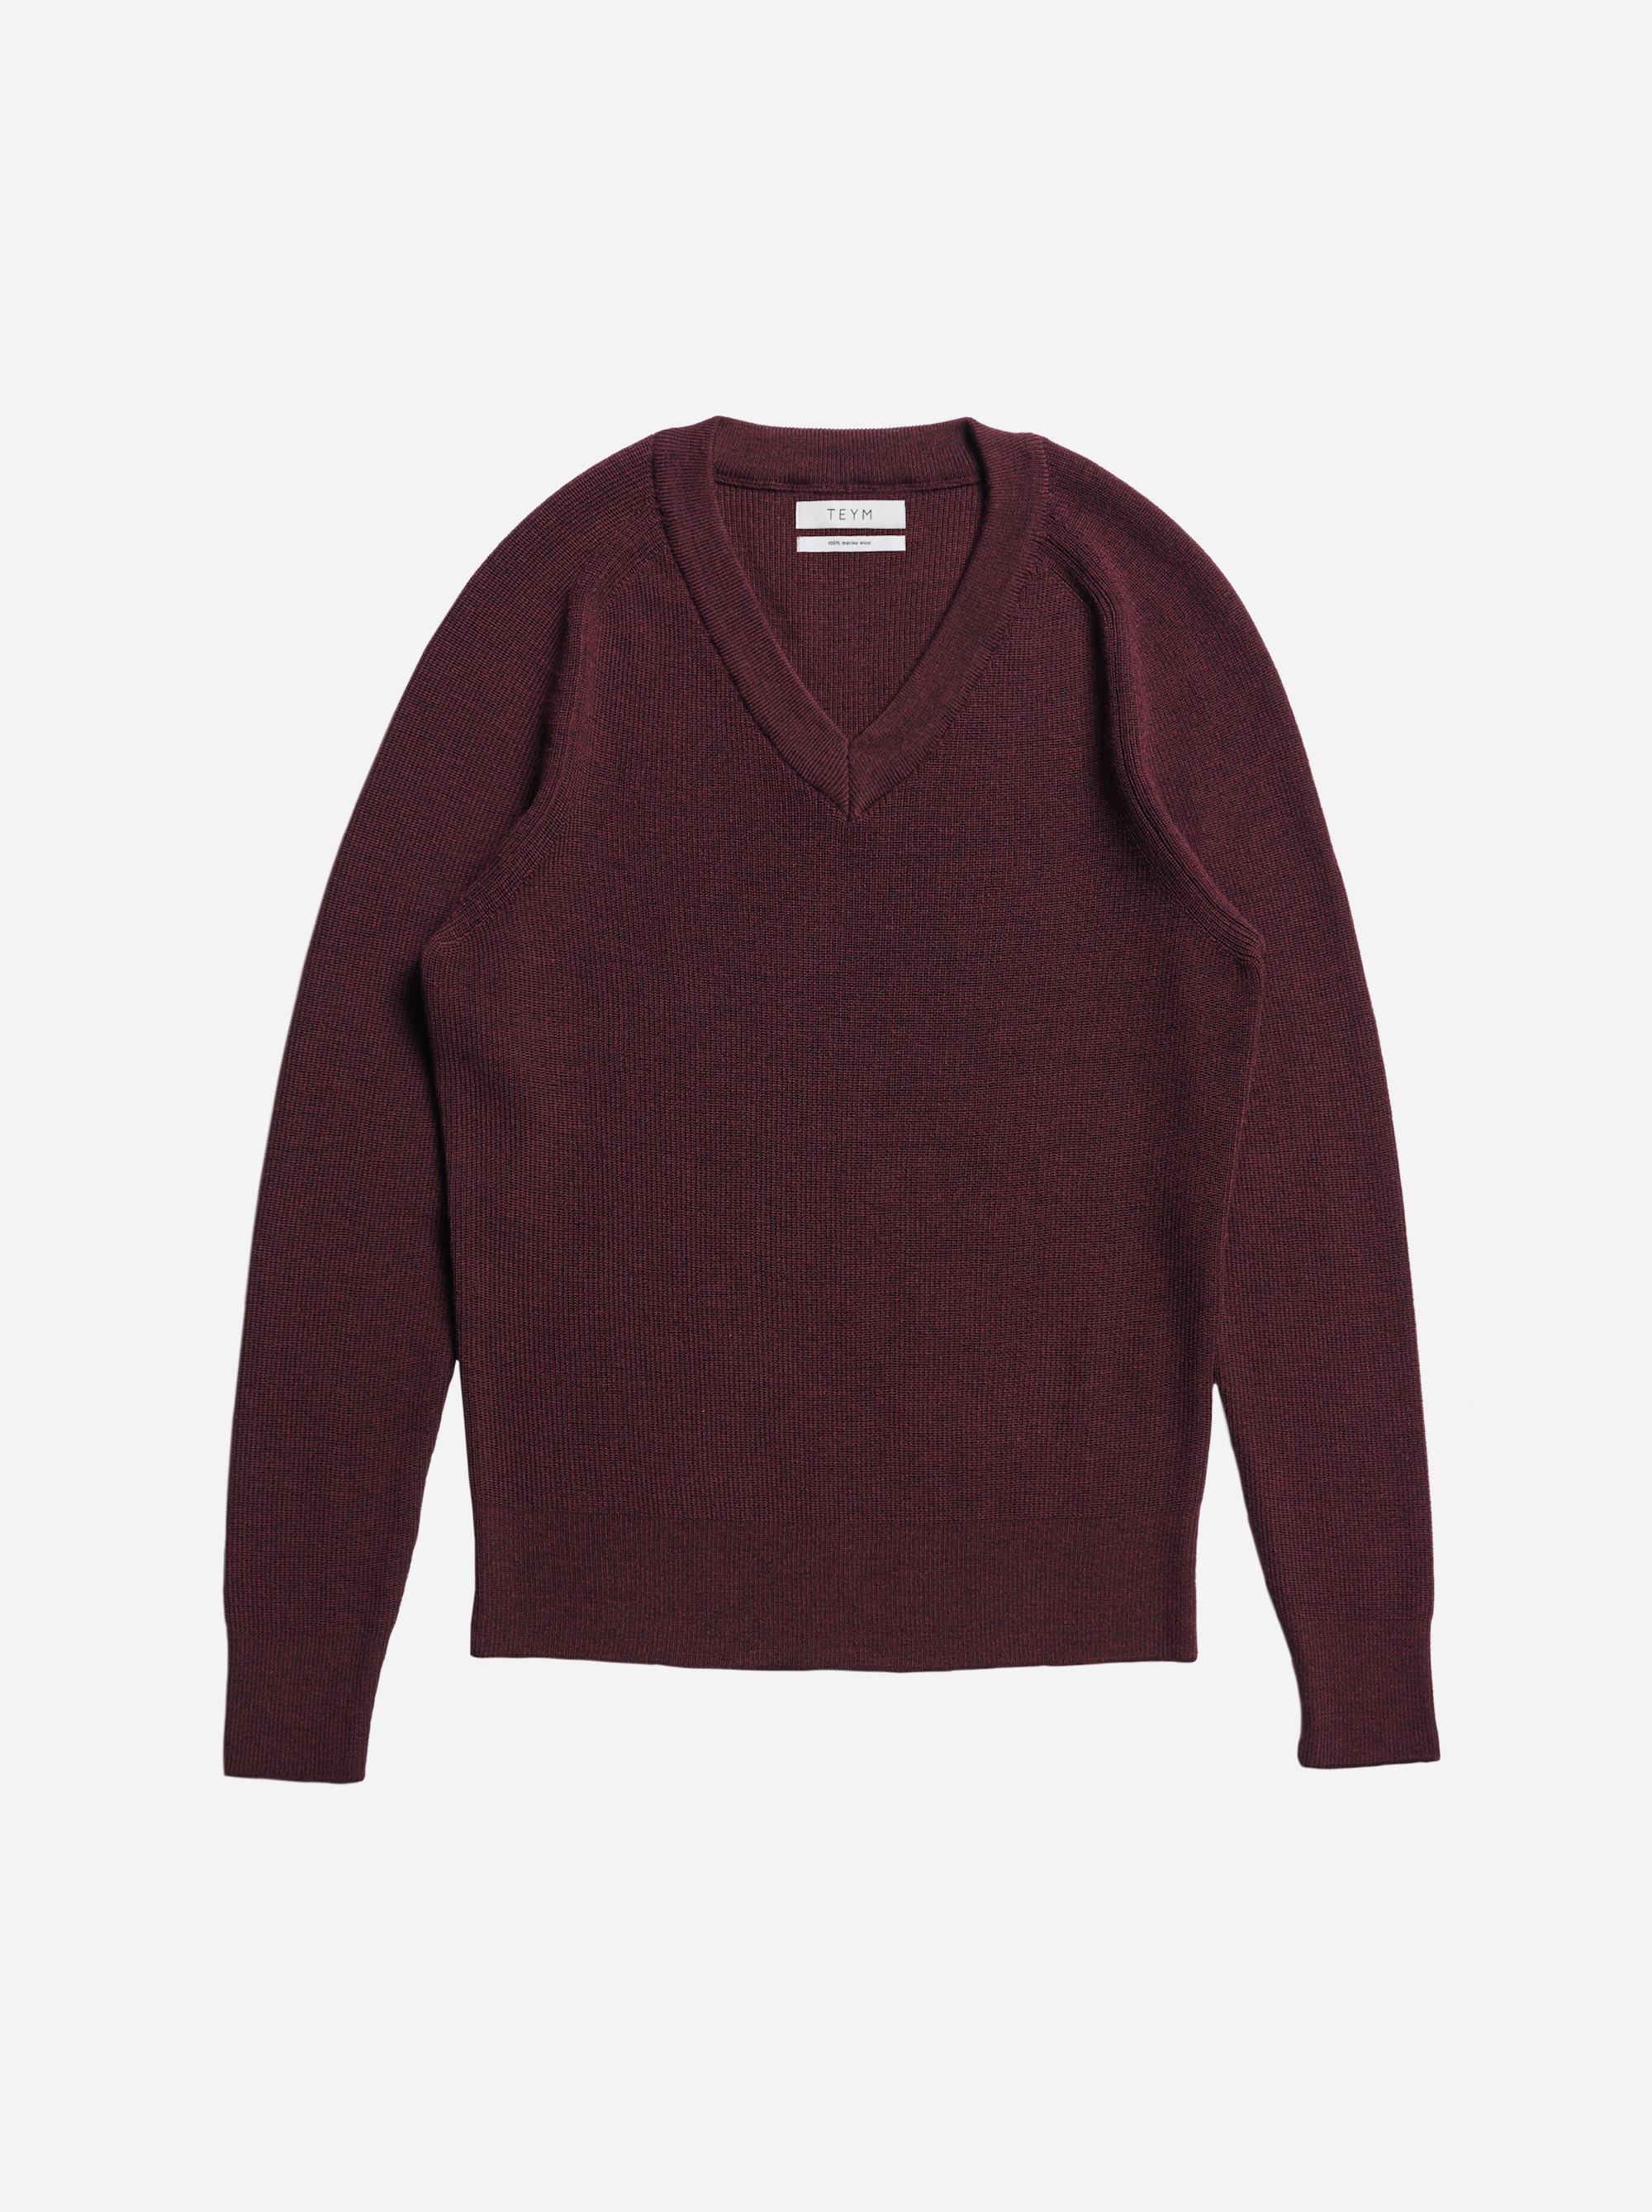 Teym - V-Neck - The Merino Sweater - Women - Burgundy - 4